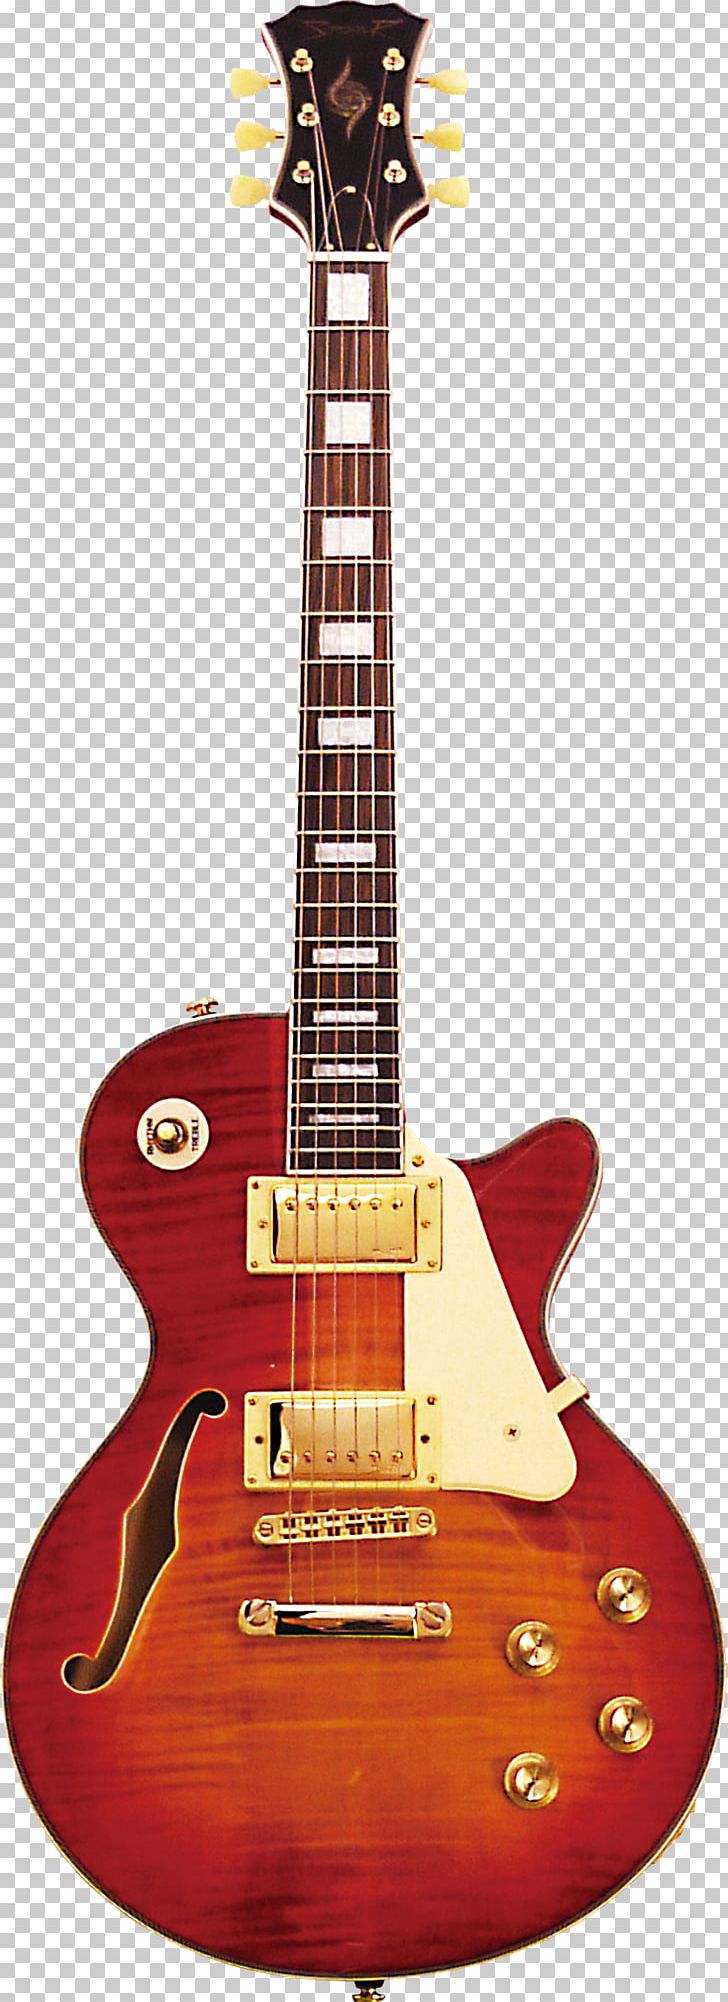 Gibson Les Paul Custom Guitar Epiphone Les Paul Gibson Les Paul Standard PNG, Clipart, Acoustic Electric Guitar, Cuatro, Gibson Les Paul Studio, Guitar, Guitar Accessory Free PNG Download